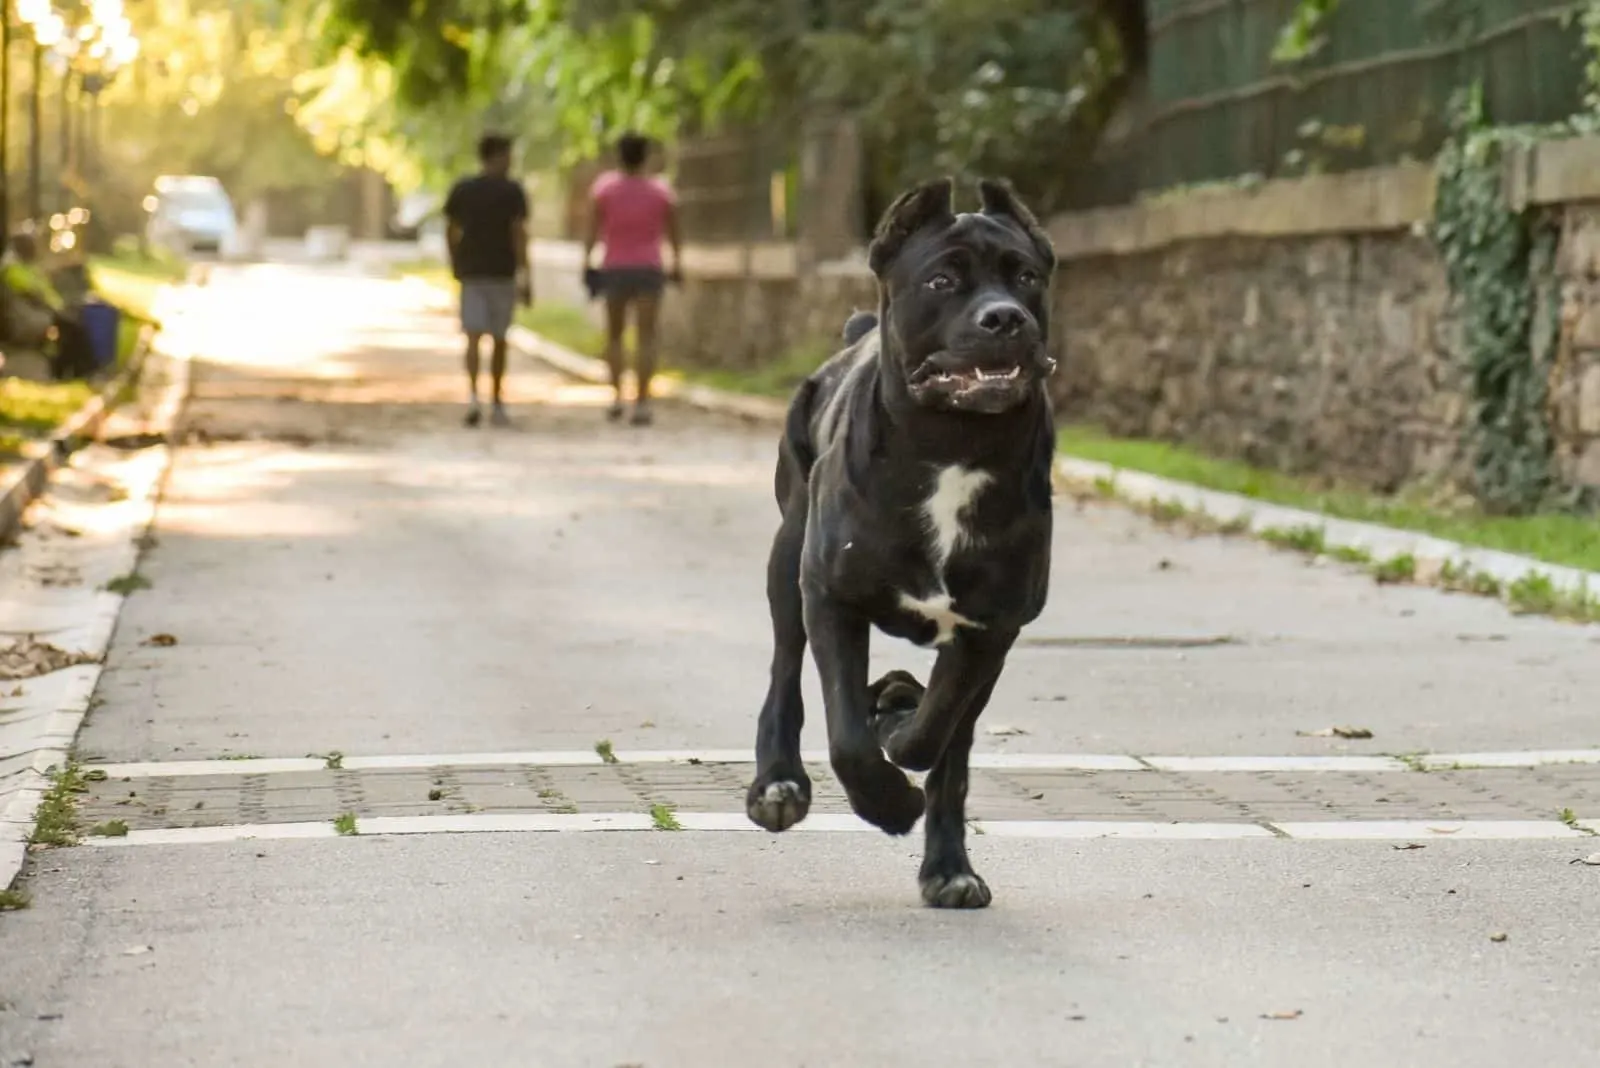 cane pitbull dog running in the street